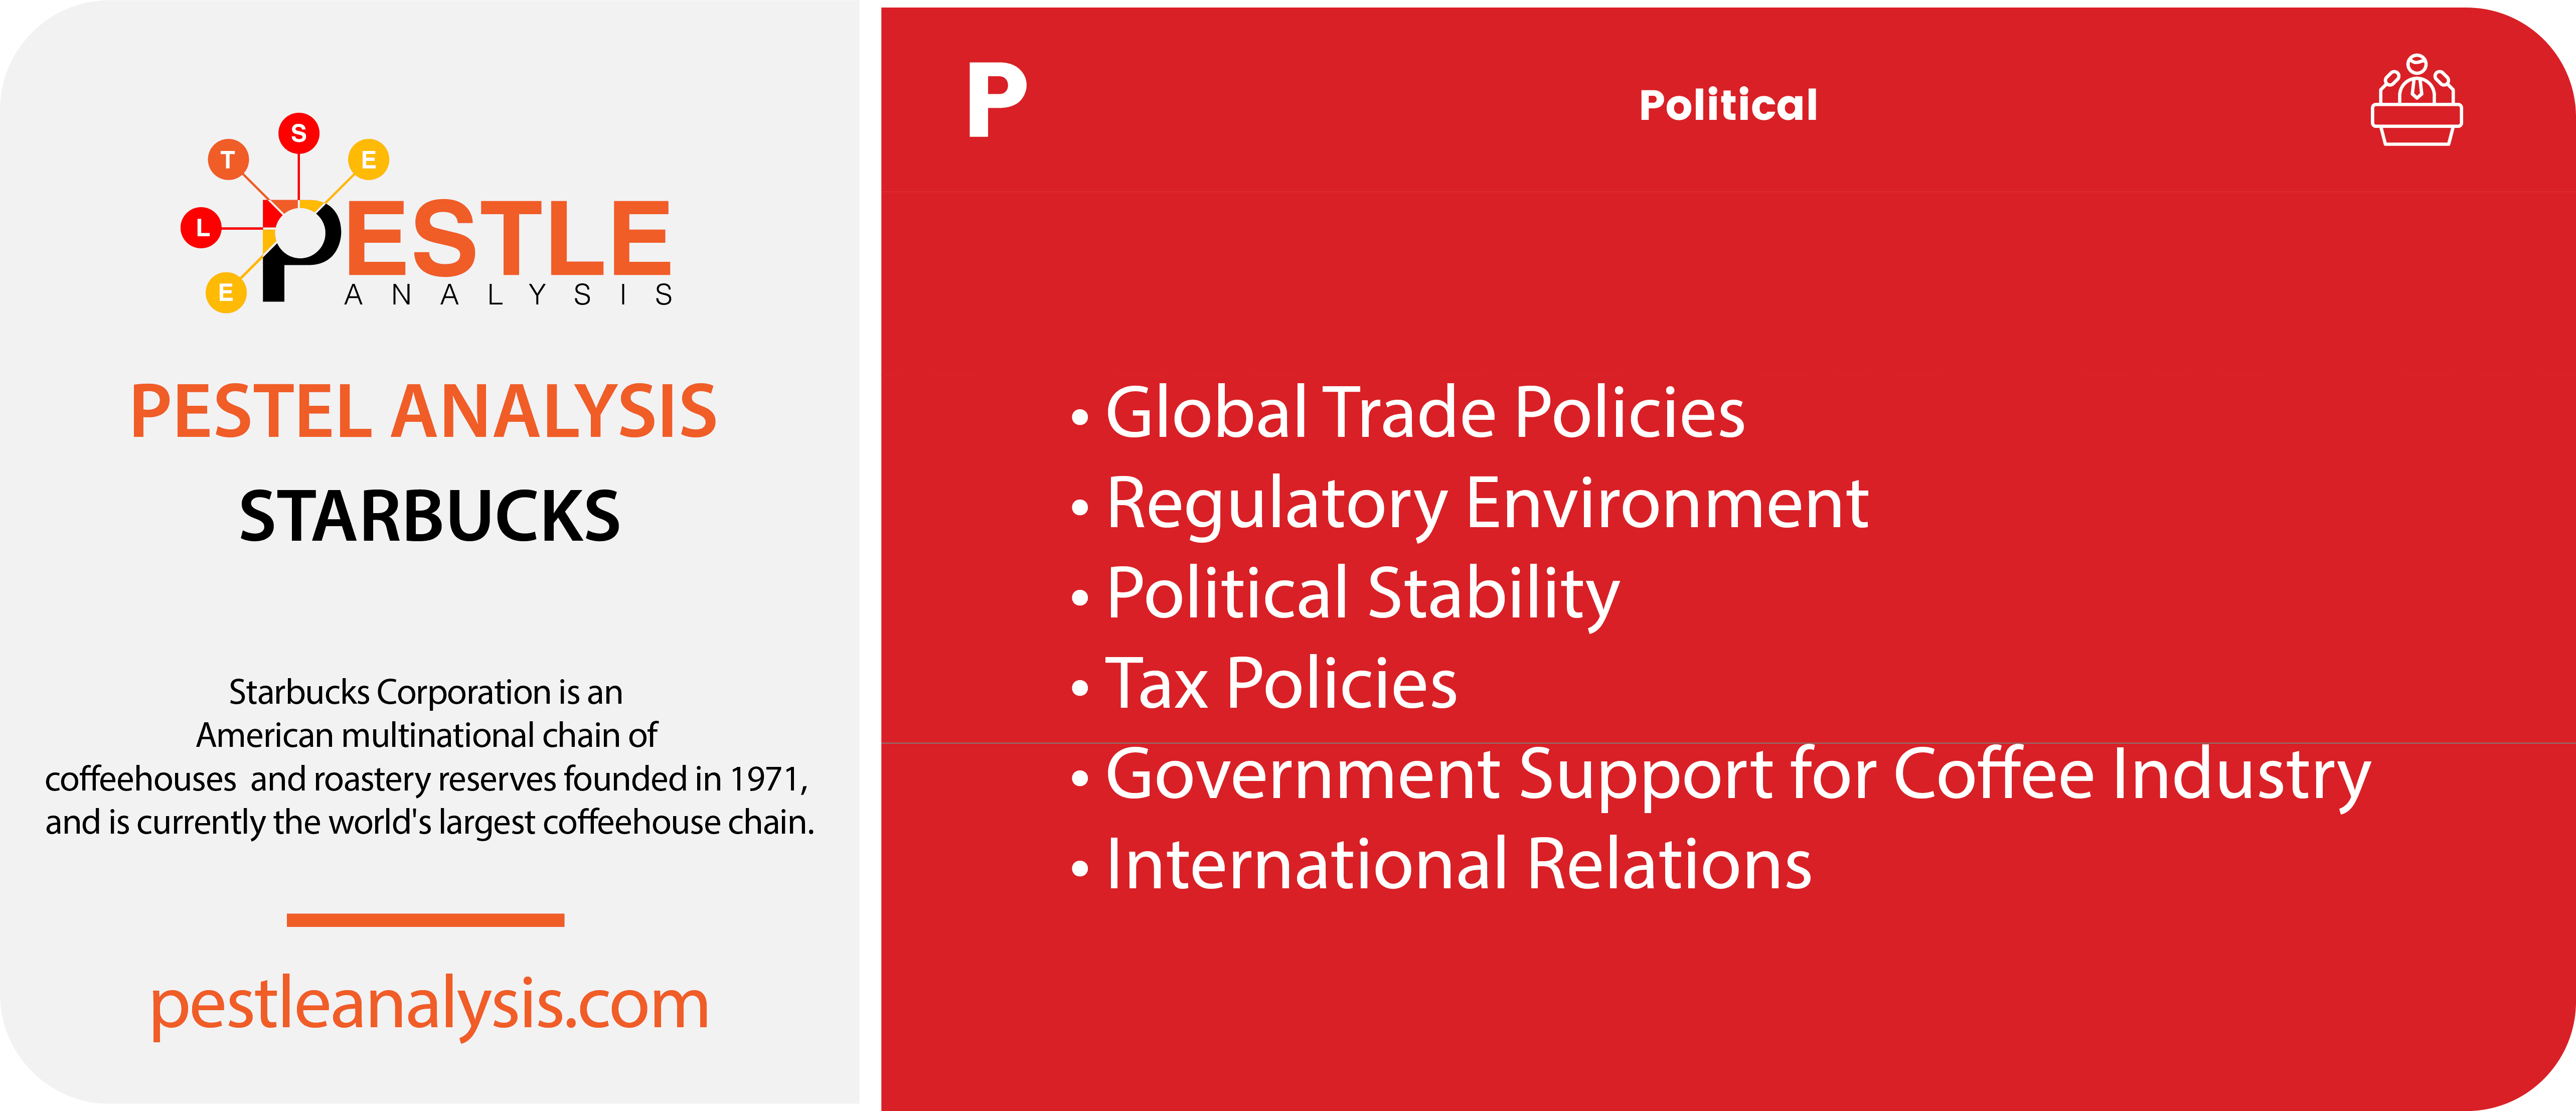 starbucks-pestle-analysis-political-factors-template